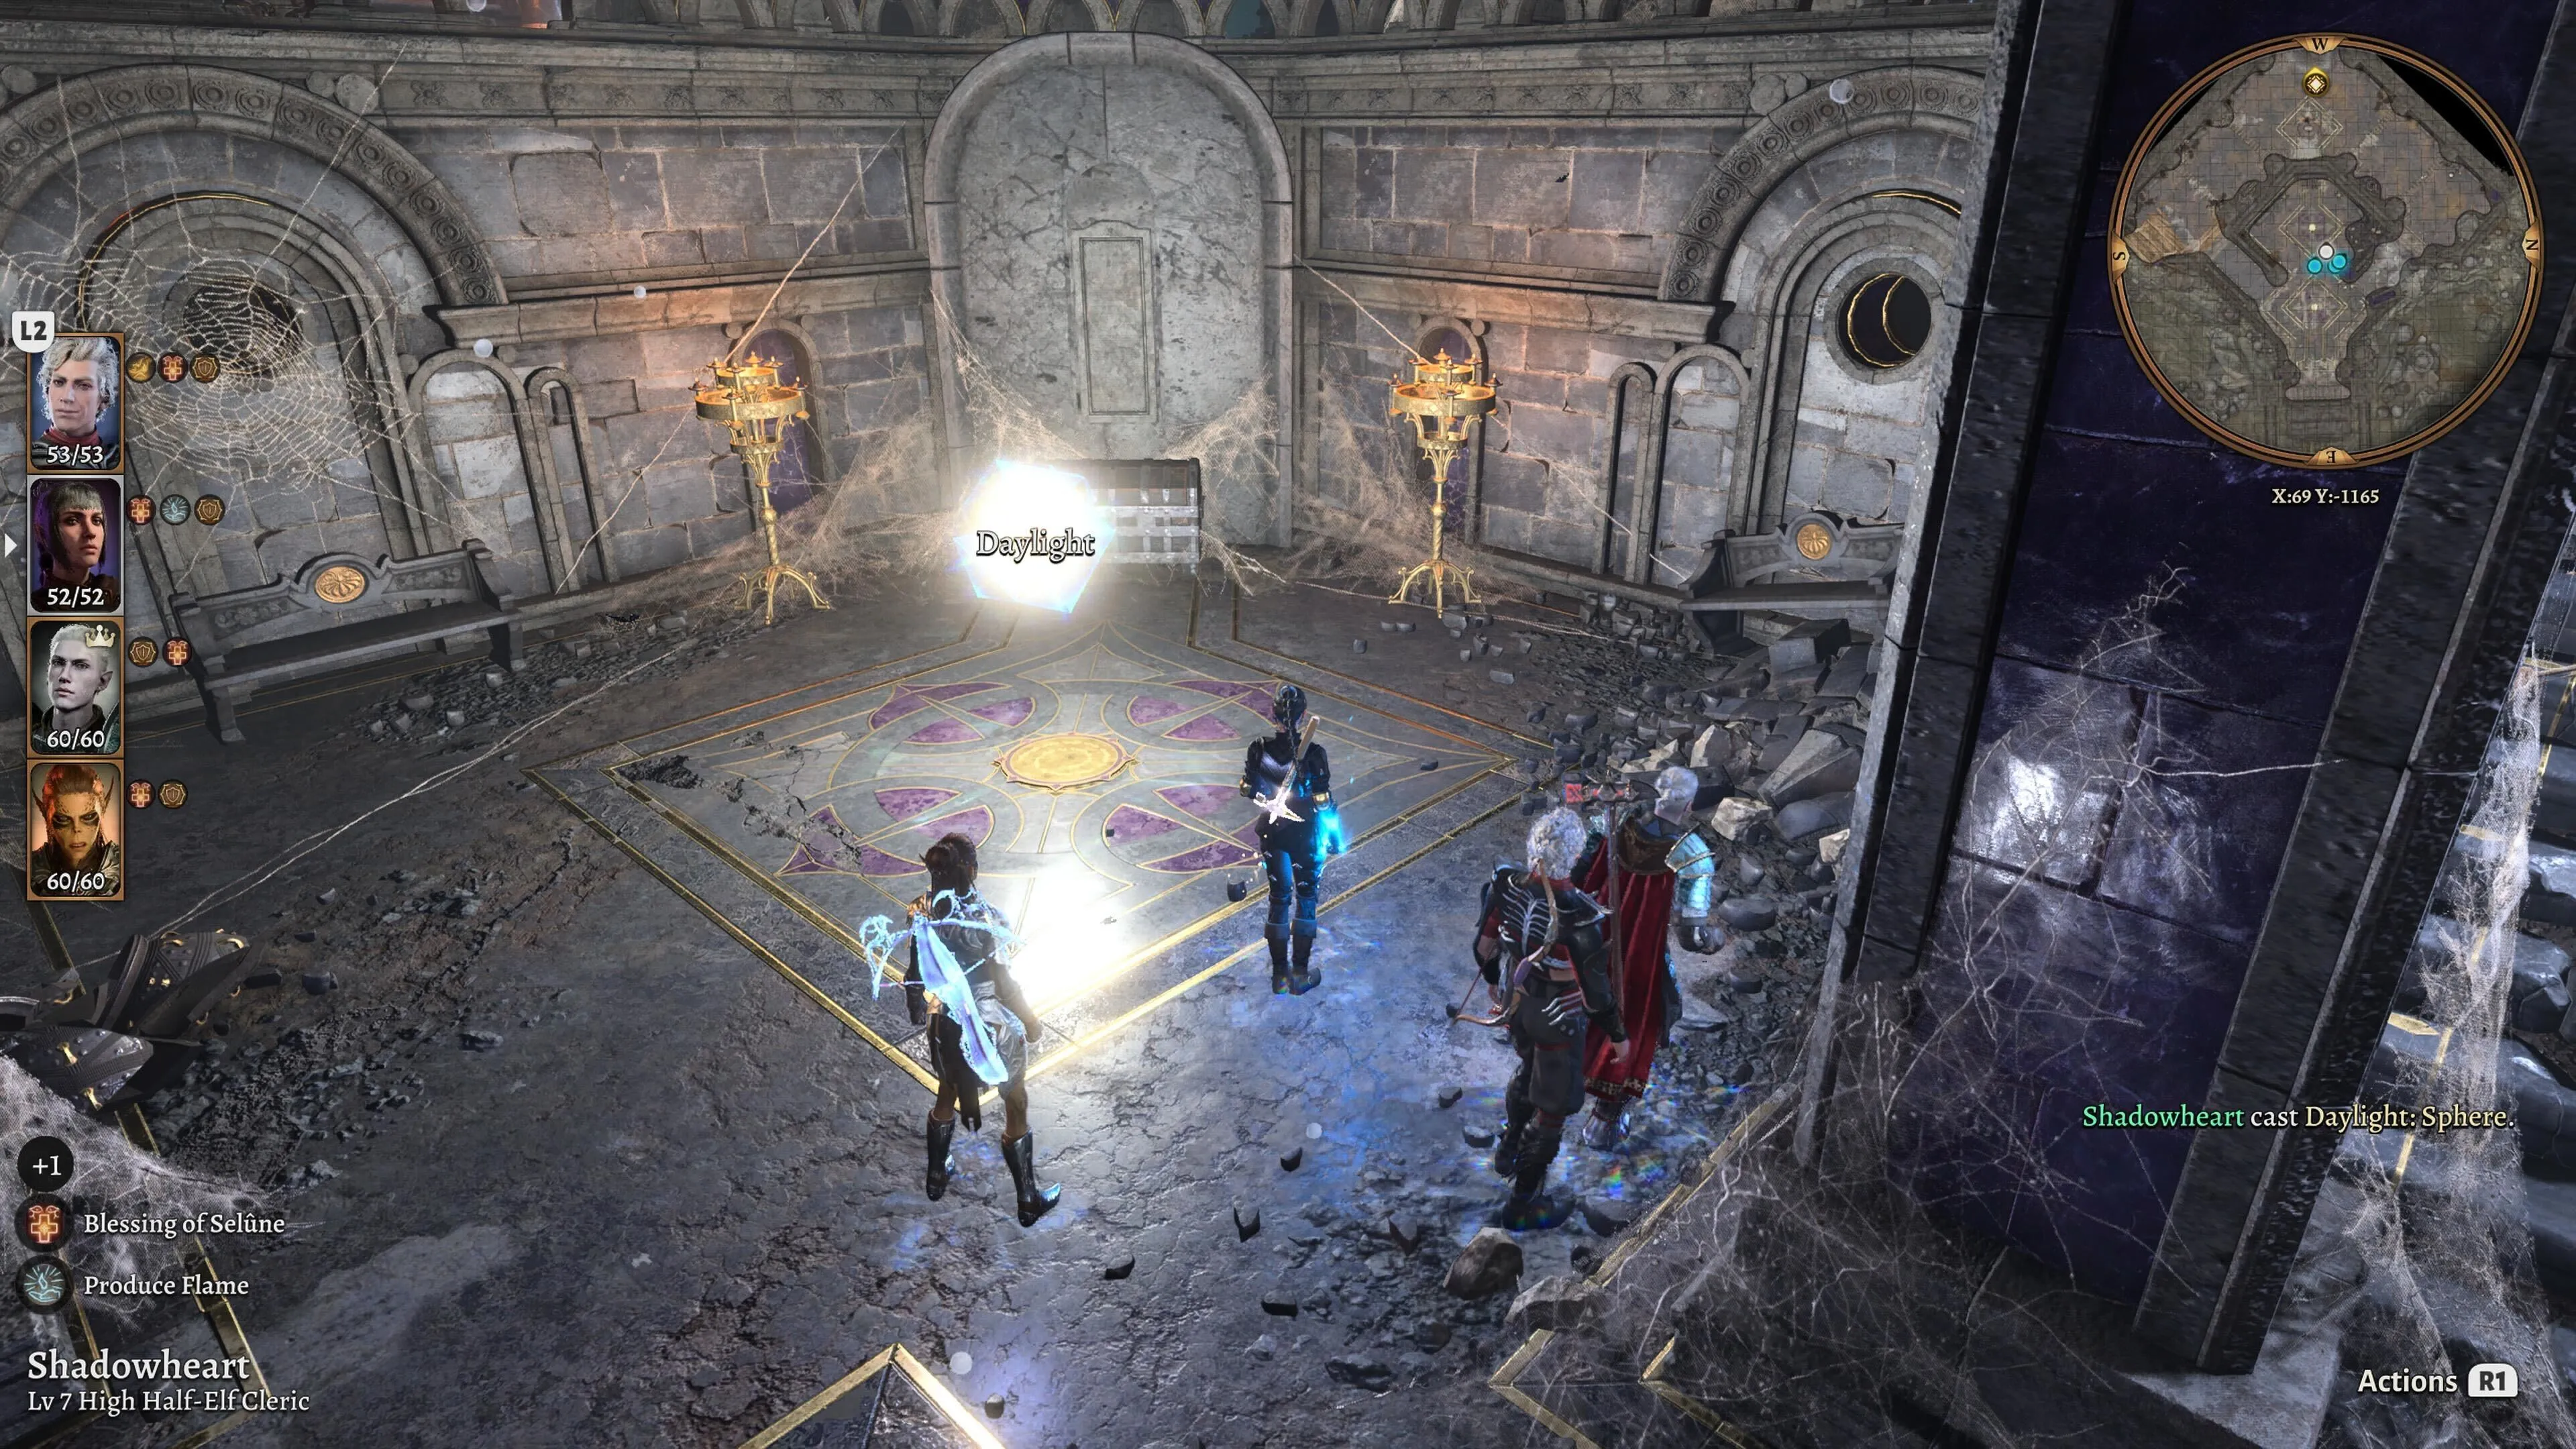 『Baldur's Gate 3』のパーティが廃墟で日照球を持って立つ姿